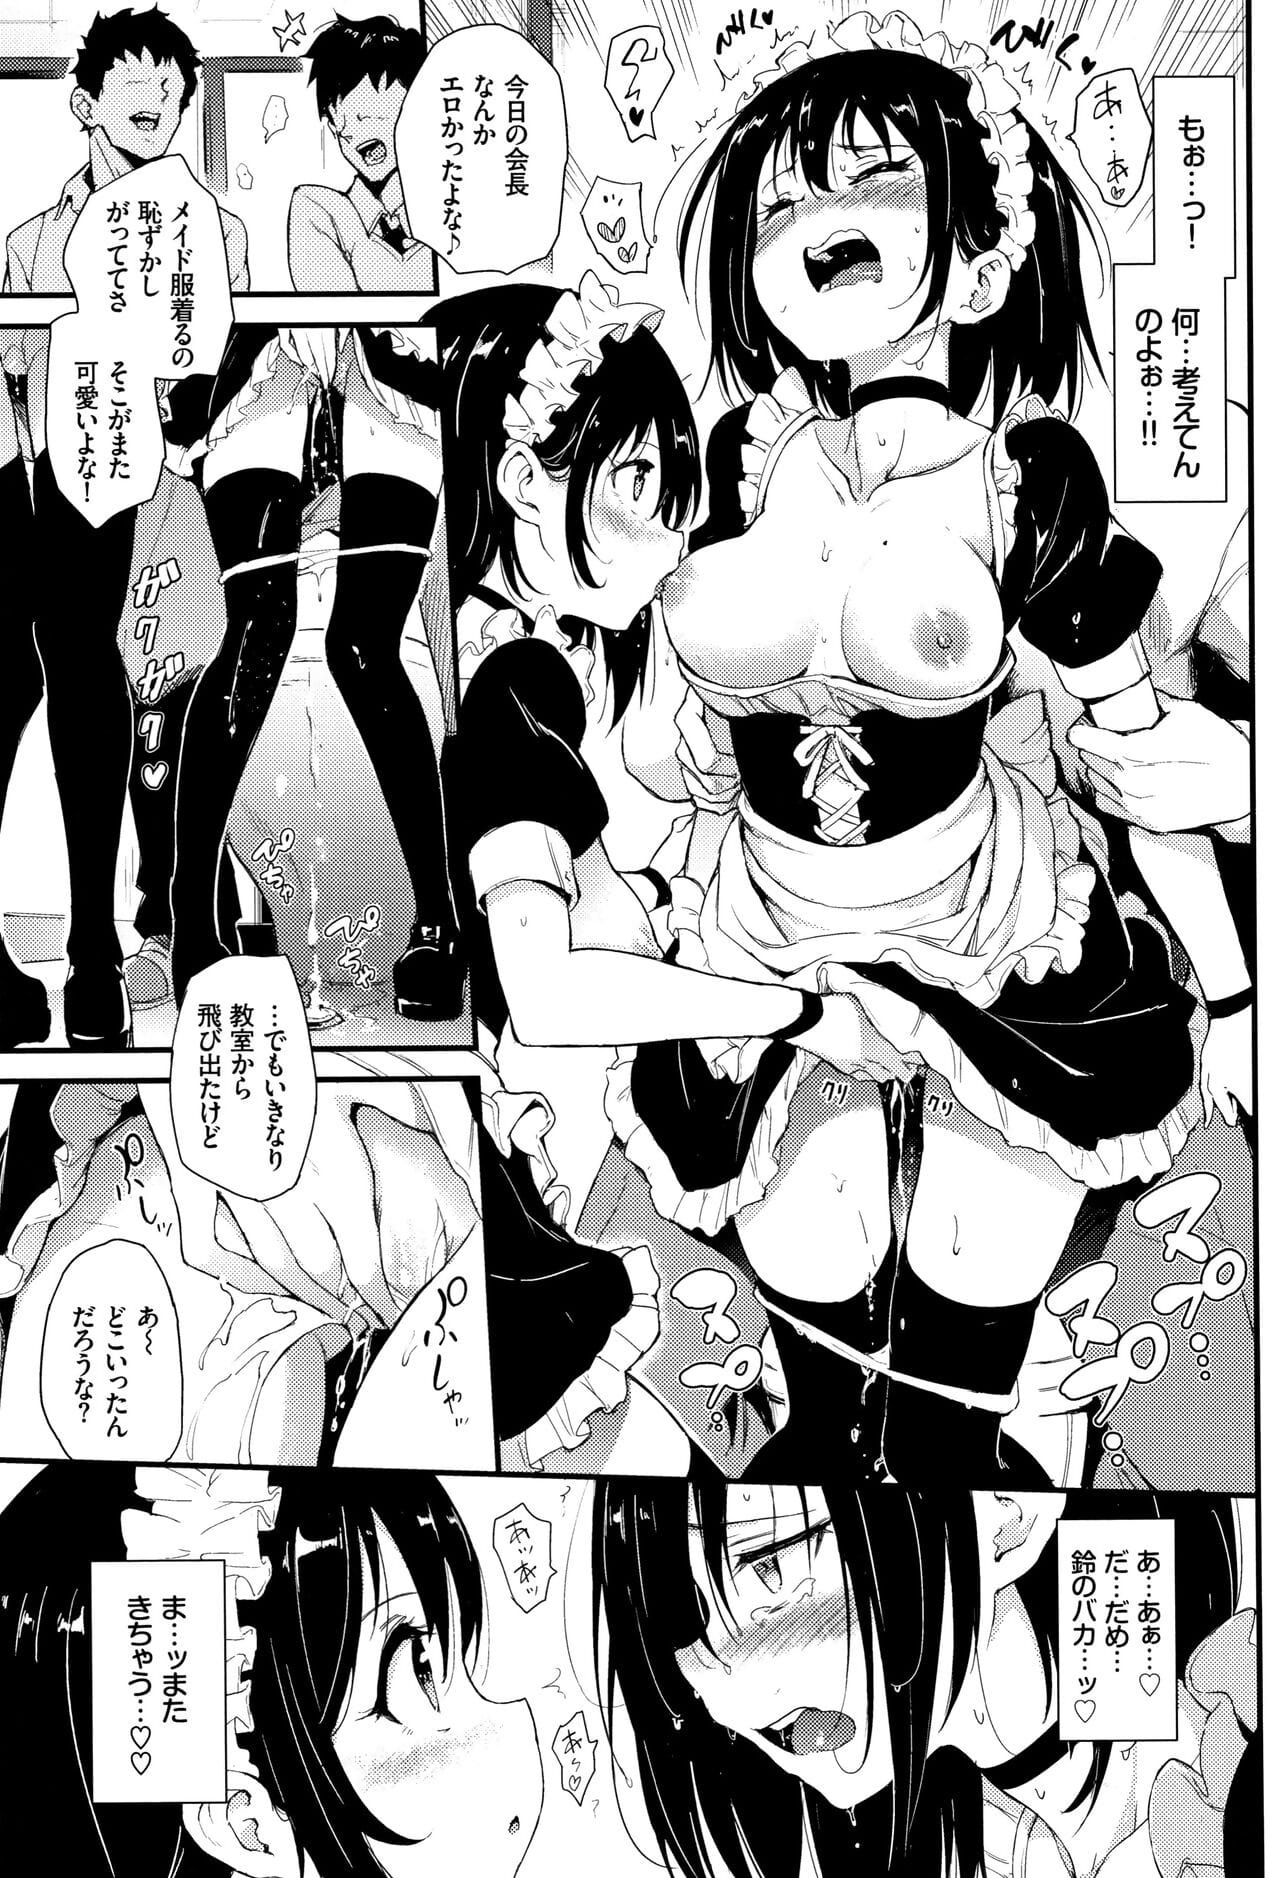 Reader: Kaede to Suzu Ch.1-3 - part 2 manga, ffm threesome bondage.